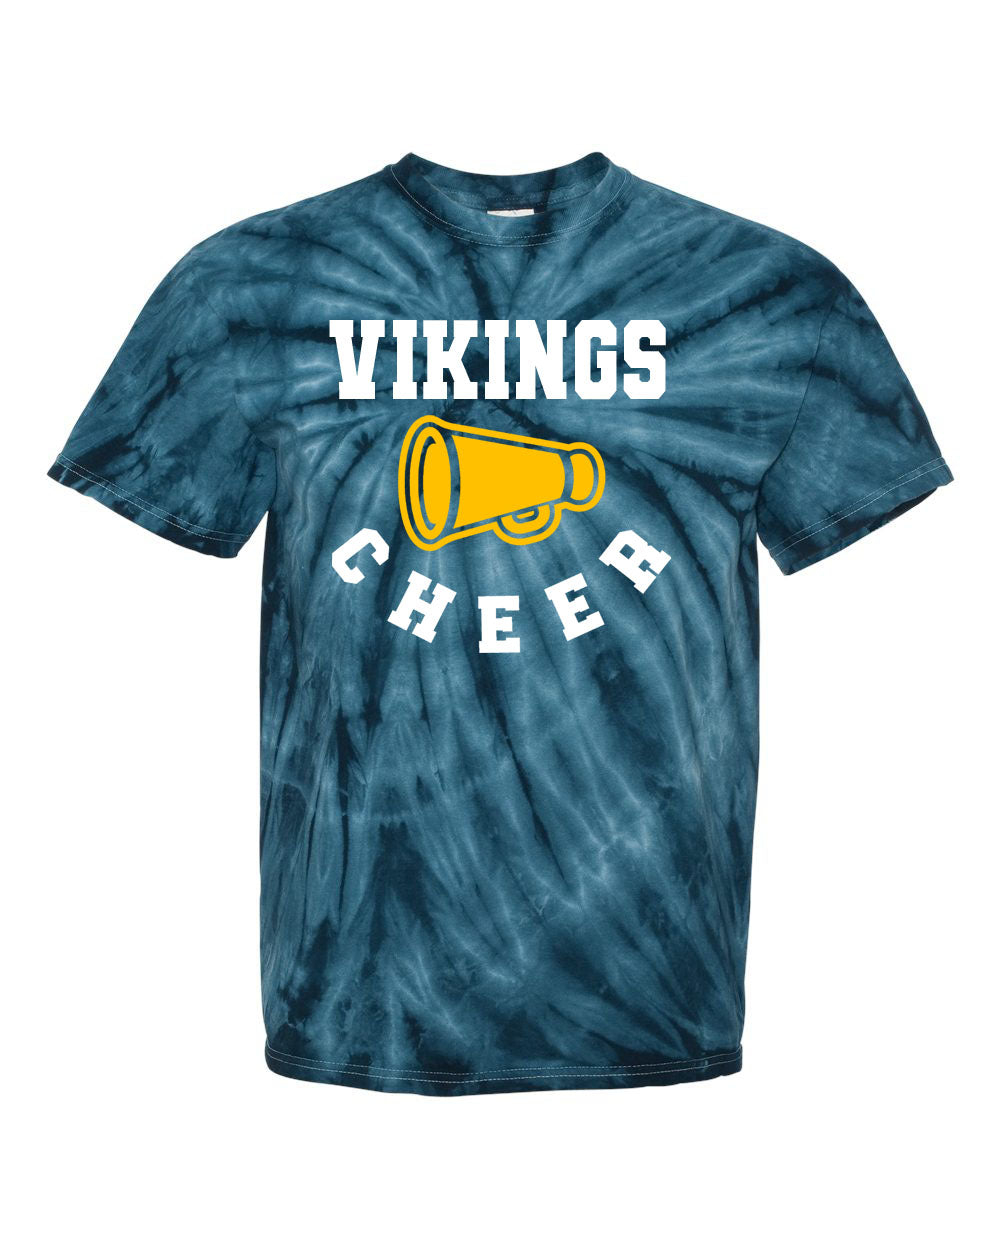 Vernon Vikings Cheer Tie Dye t-shirt Design 13